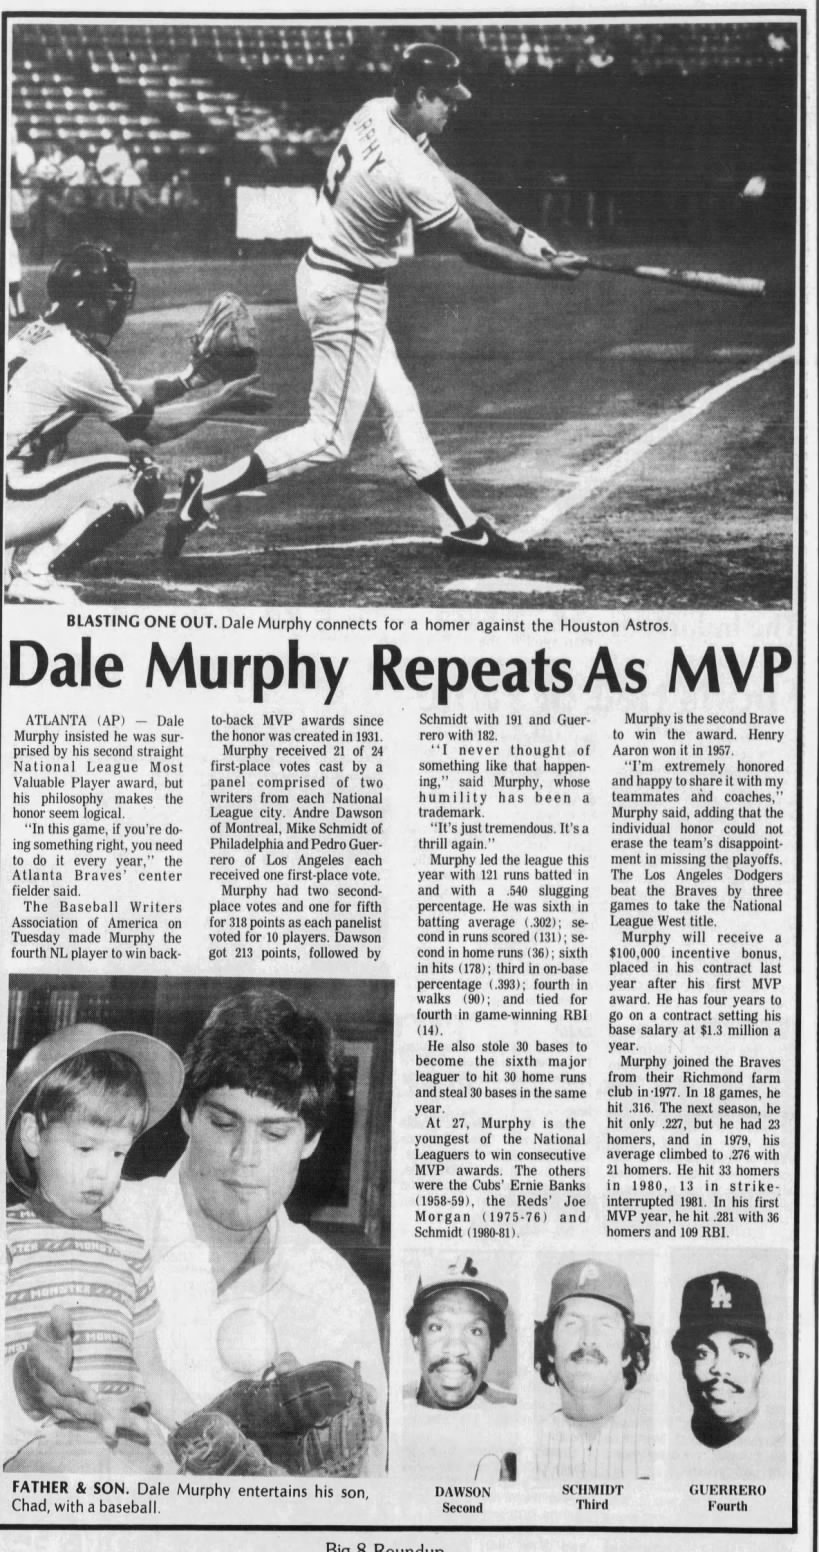 Dale Murphy wins 2nd MVP